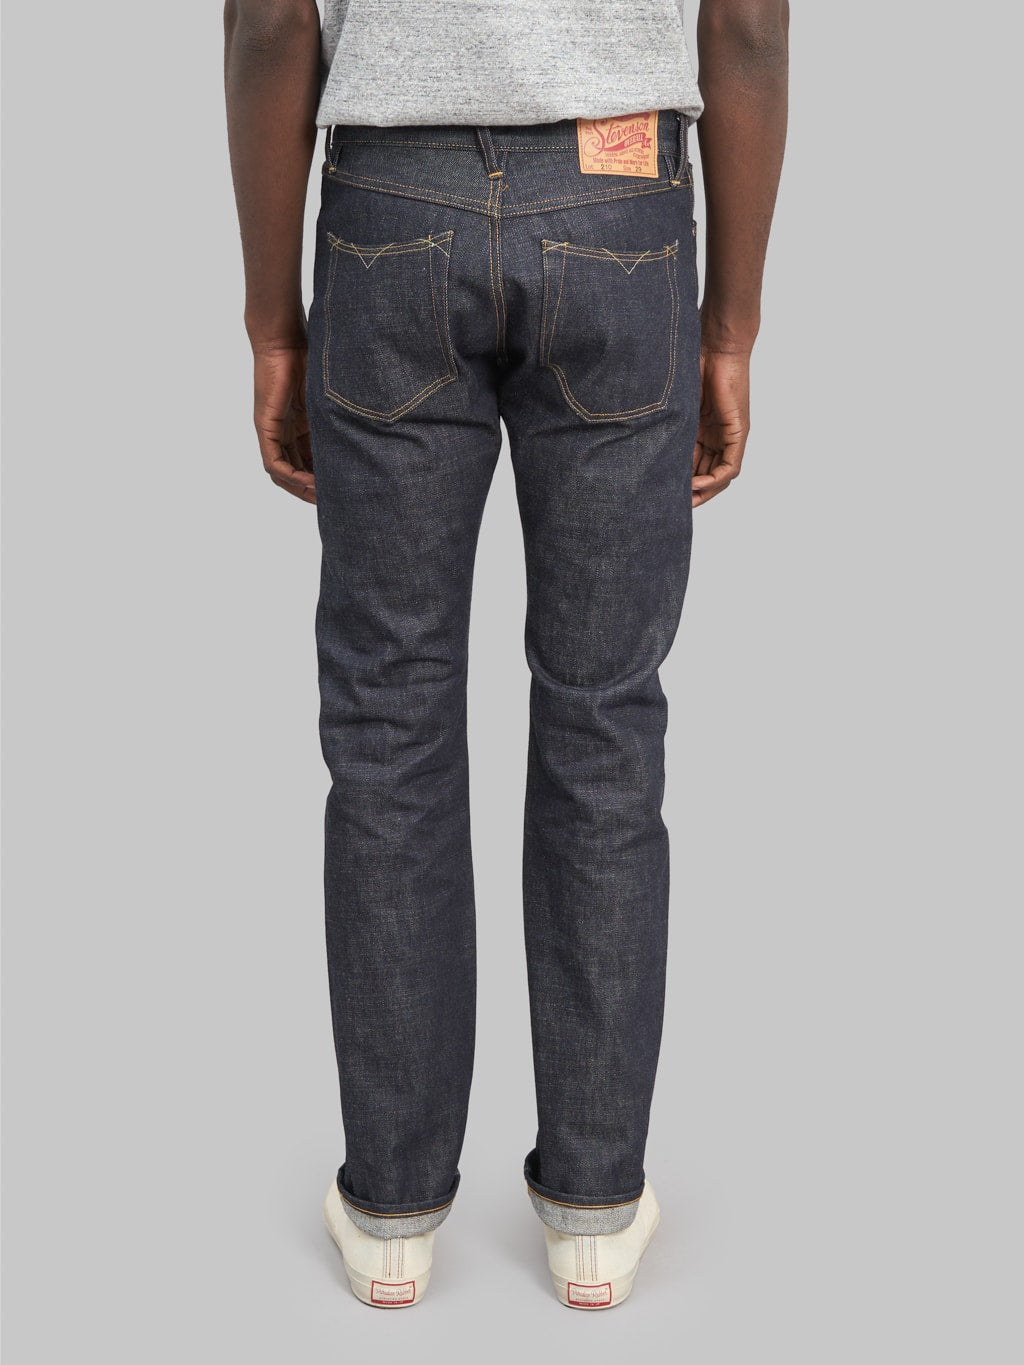 Stevenson Overall Big Sur 210 slim tapered jeans back rise